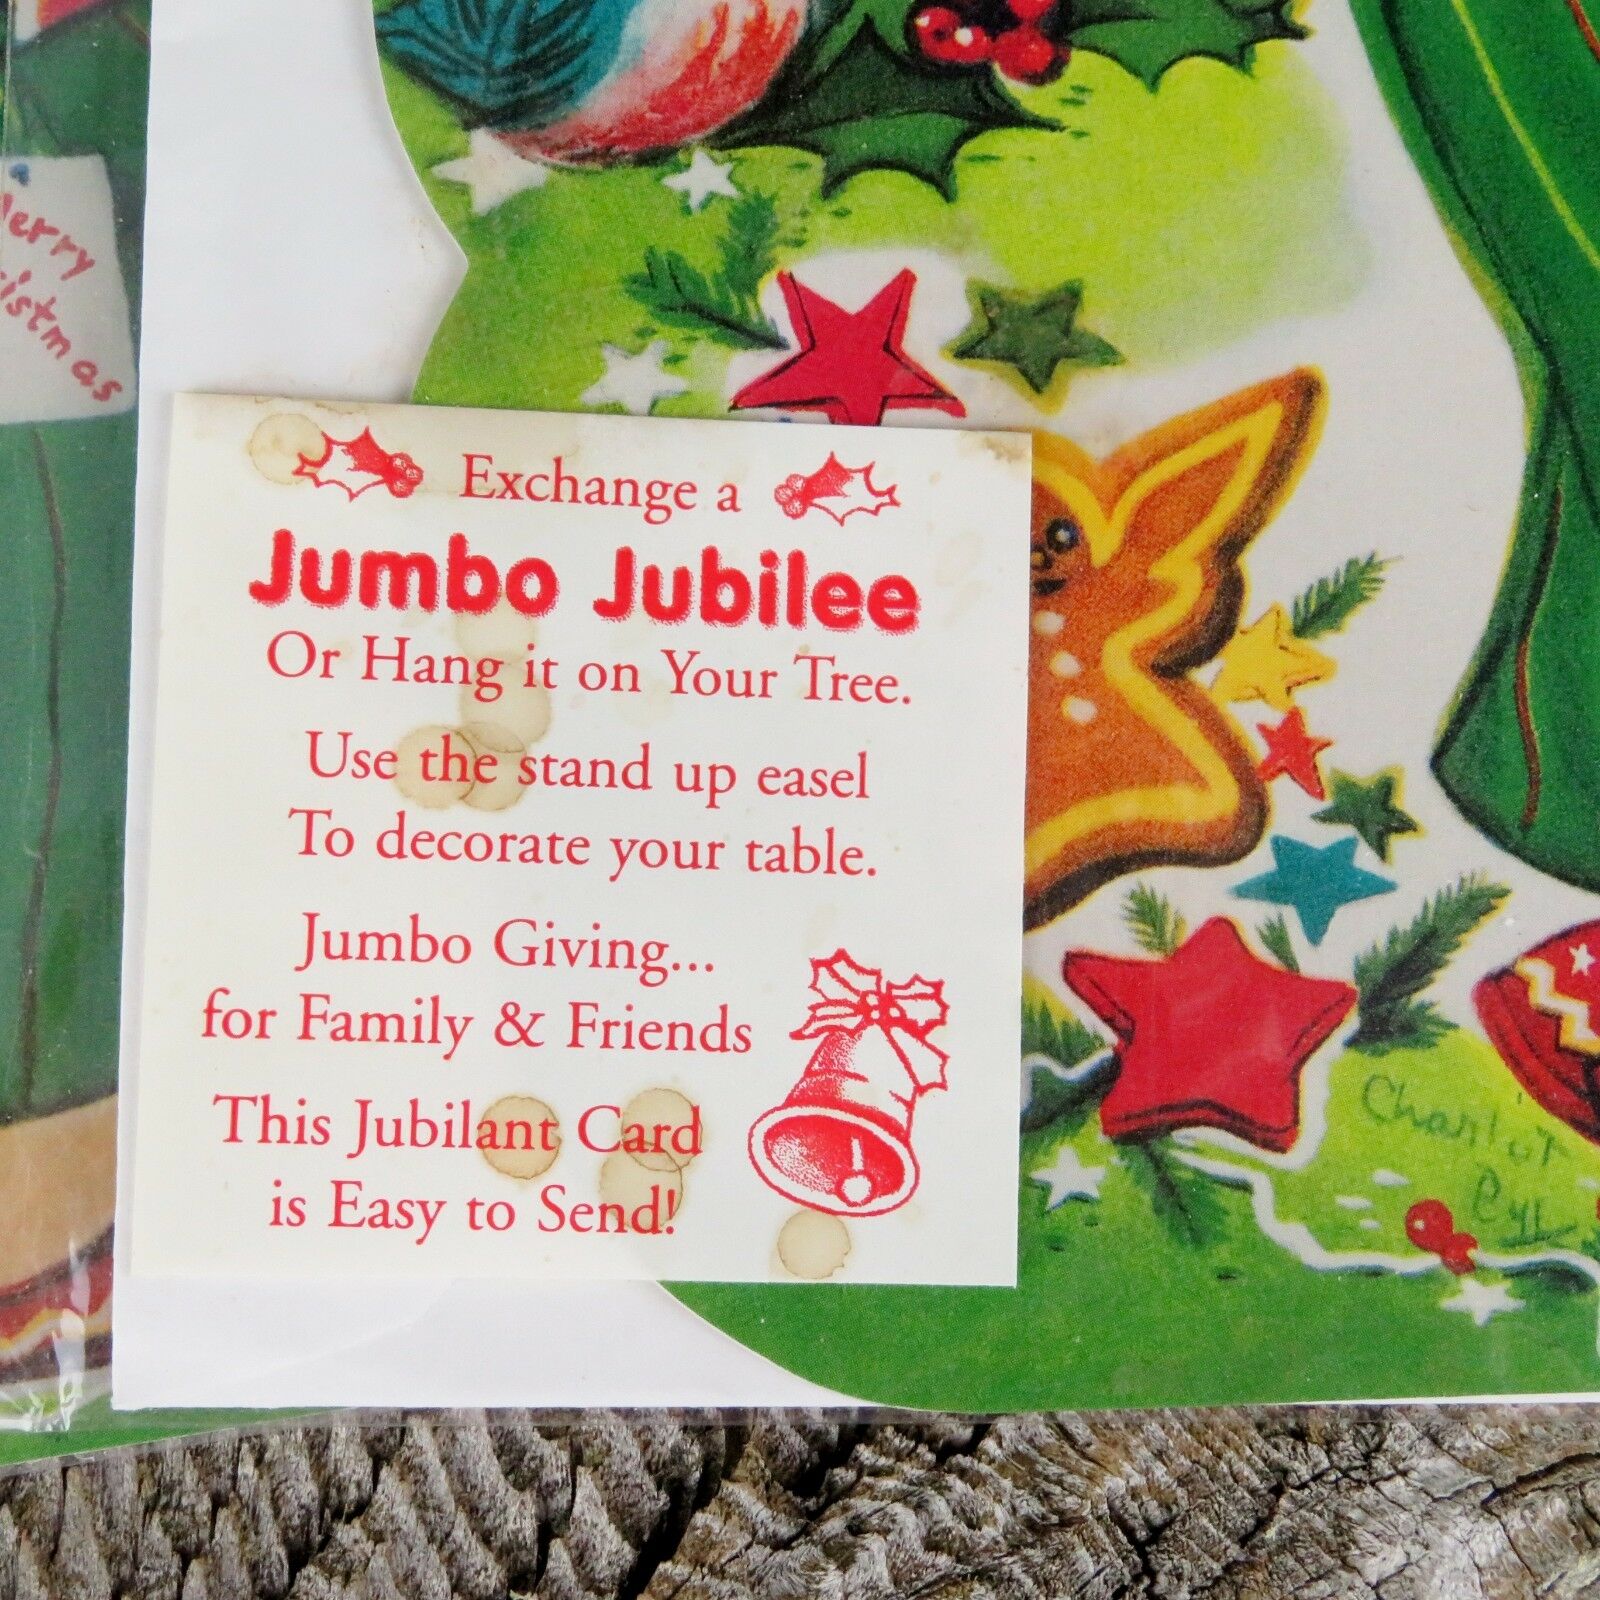 Vintage Christmas Cards Jumbo Jubilee Gallery Graphics Ornament Decoration Set - At Grandma's Table